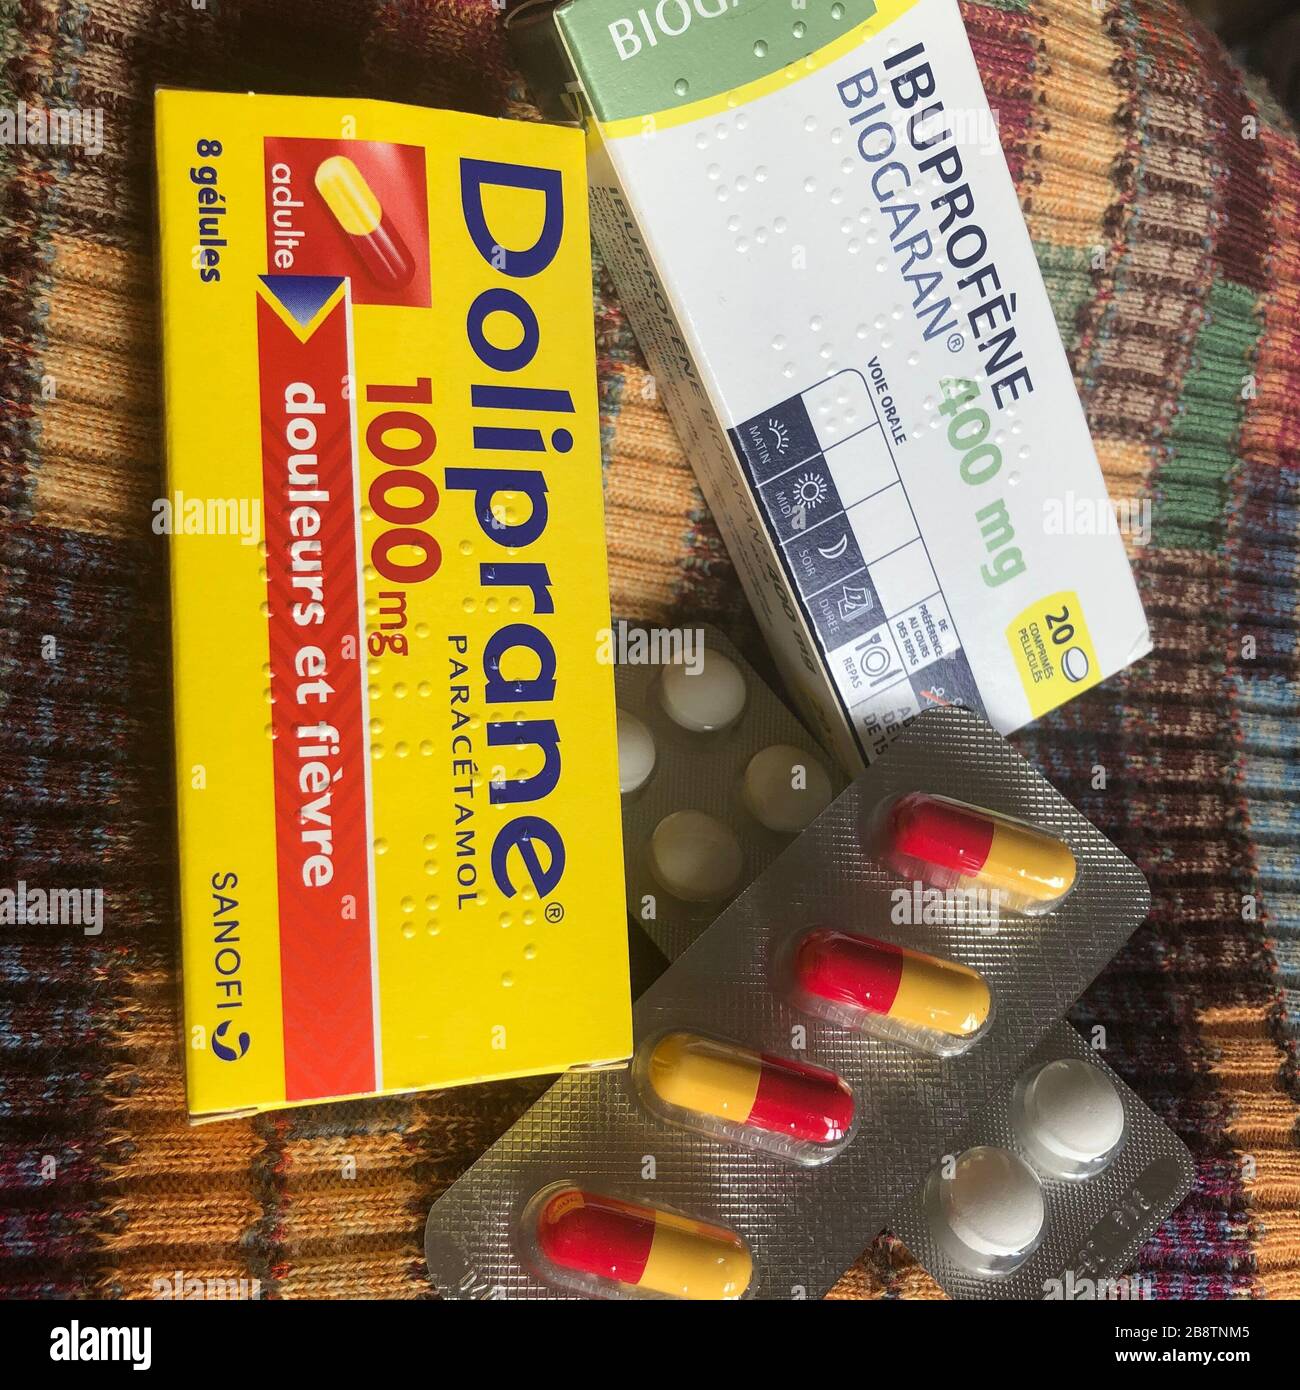 Ibuprofene e paracetamolo Foto stock - Alamy